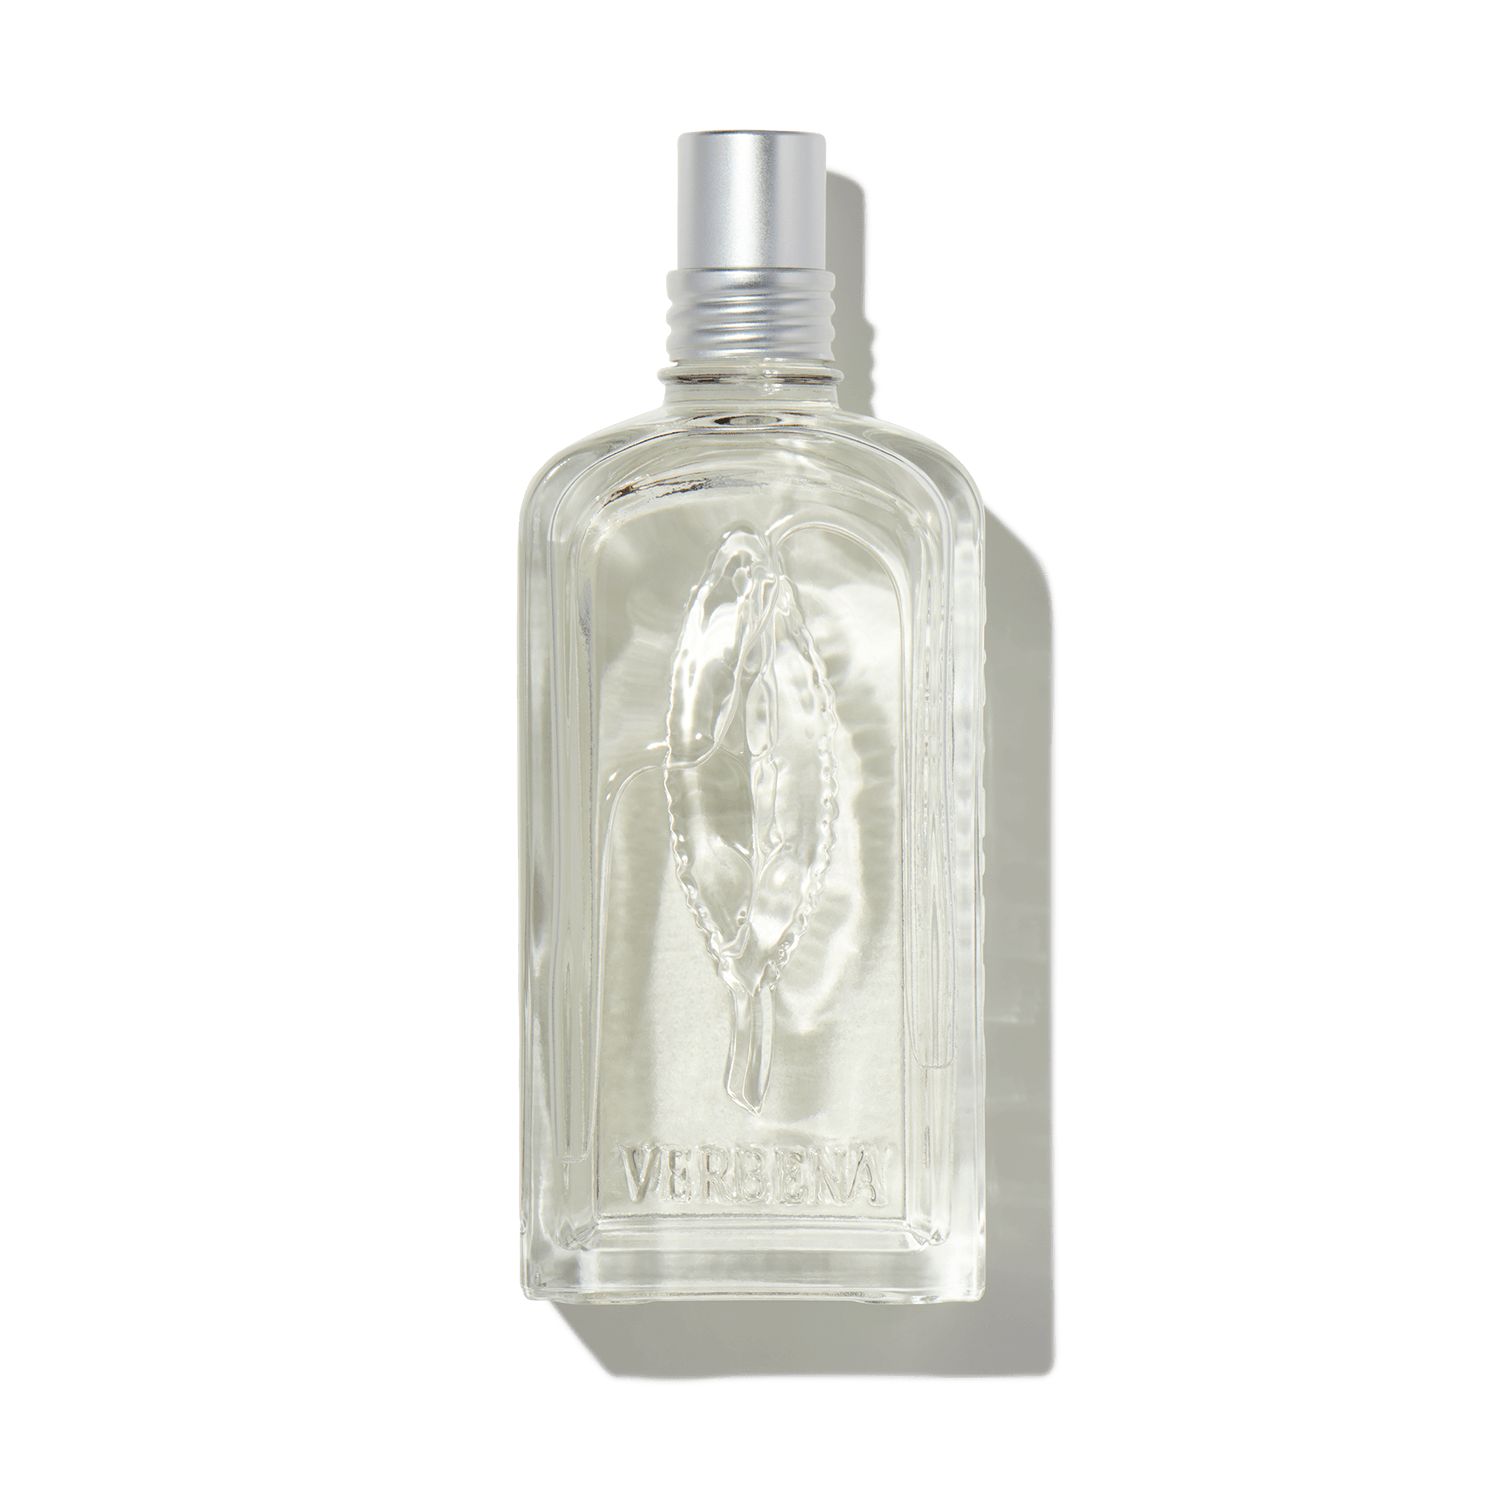 Home perfume Ivy & verbena- 100 ml - L'atelier C